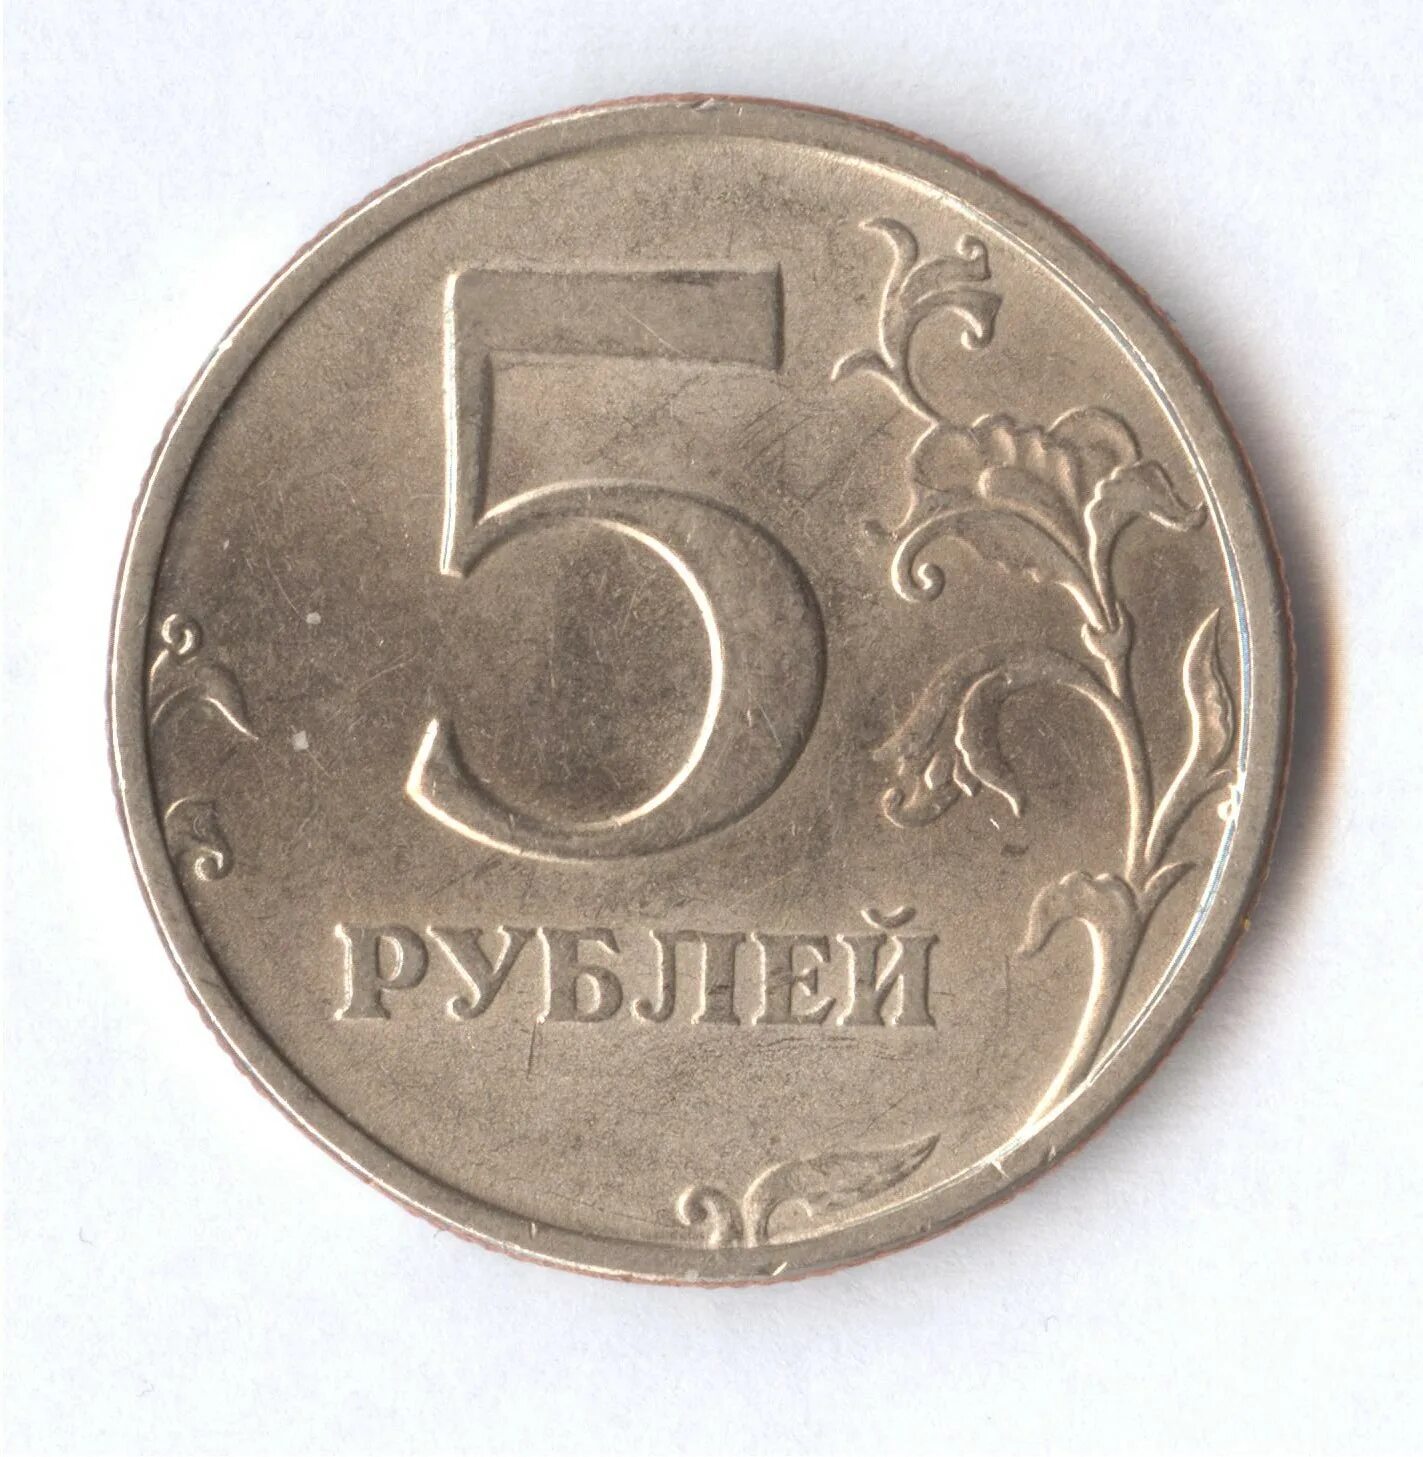 5 Рублей 1998 СПМД. Дорогие монеты 5 рублей 1998. Монеты СПМД 1998 год 5 рублей. Нумизматика 5 рублей 1998.